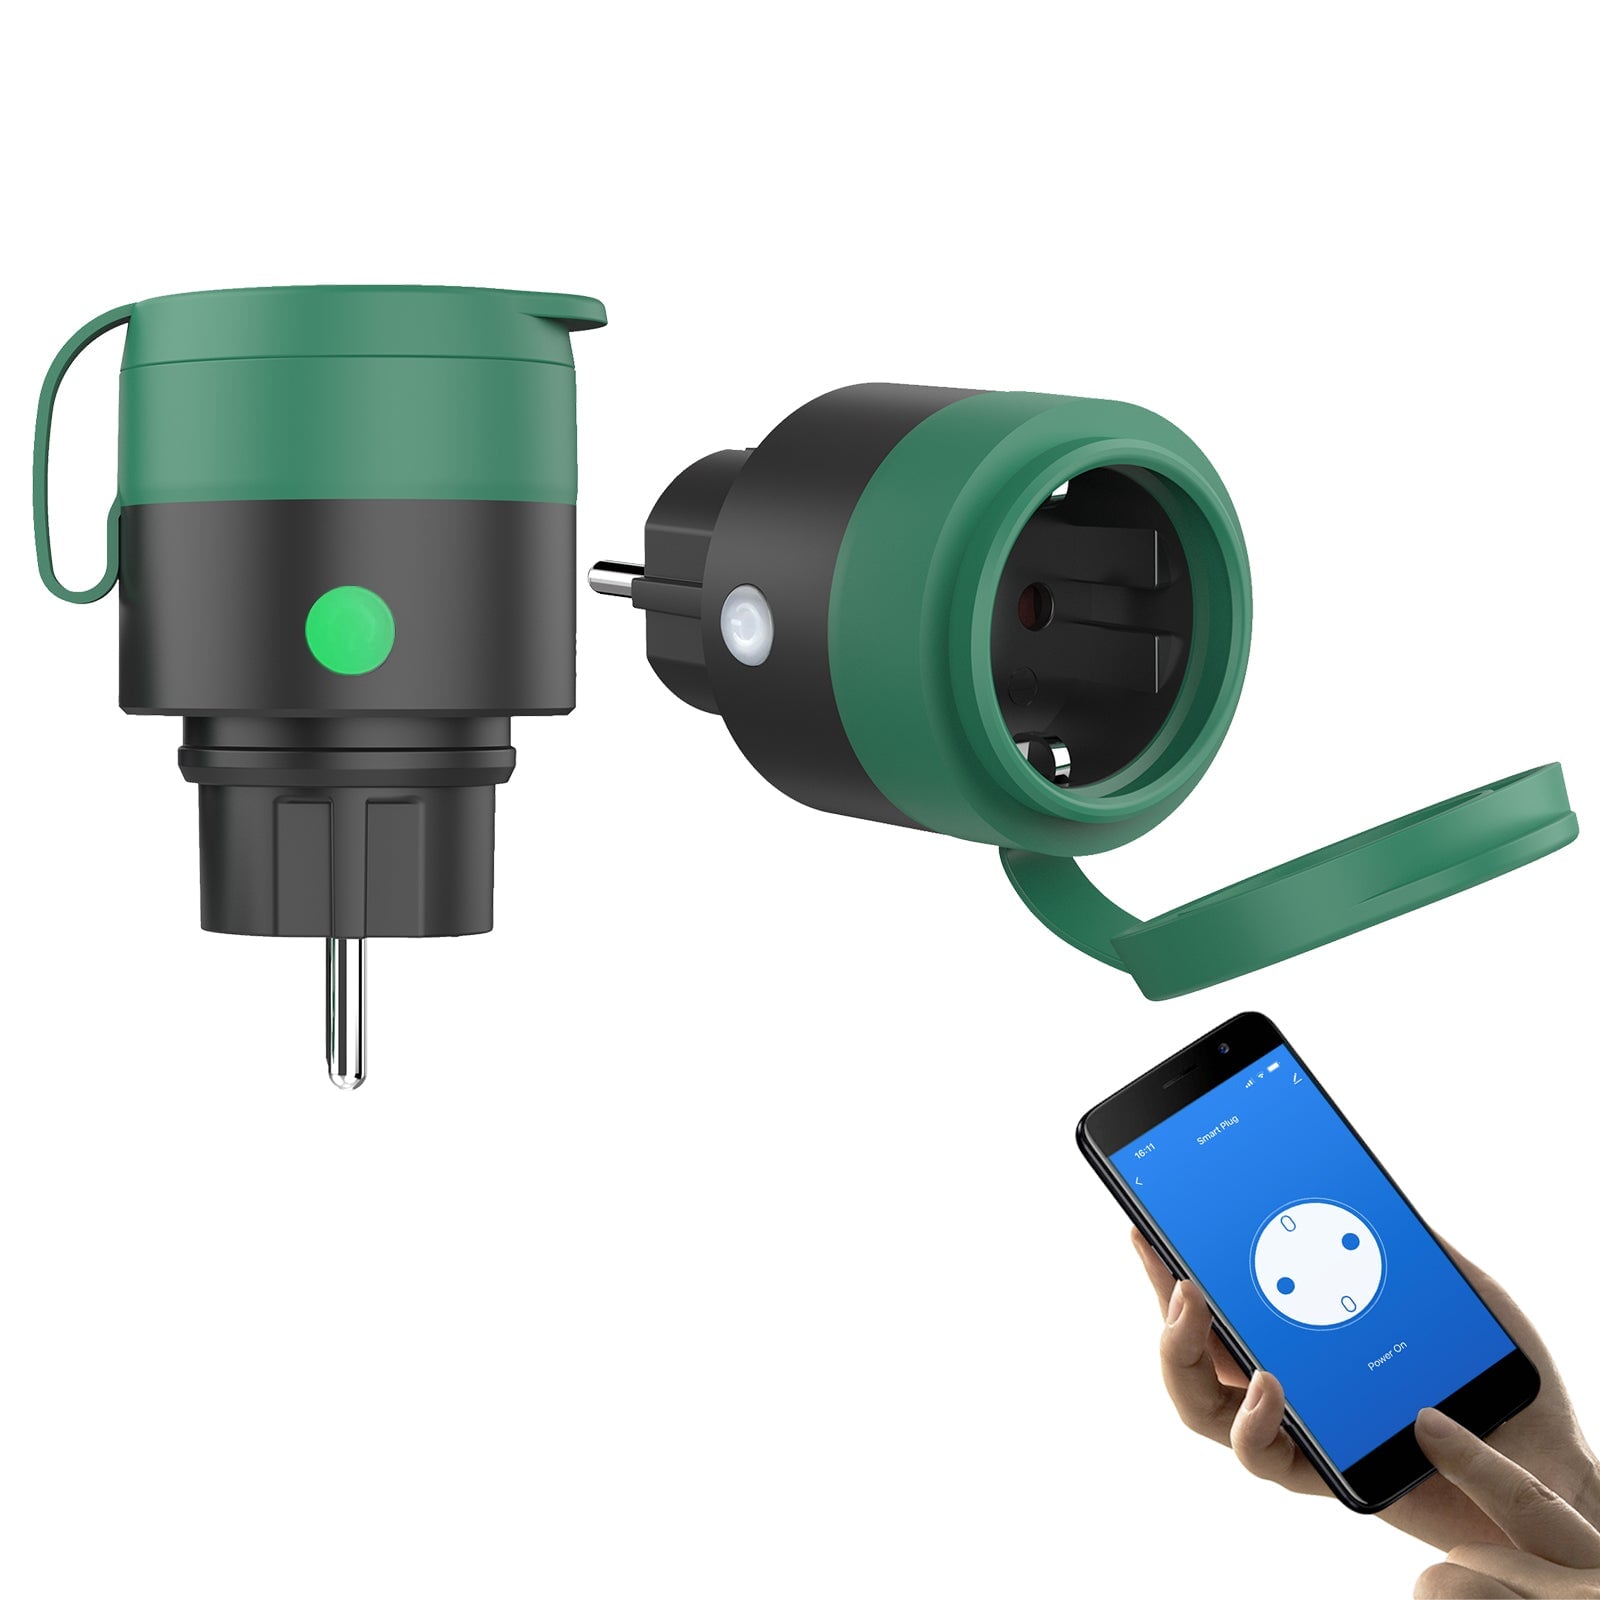 BSEED IP44 waterproof smart WiFi EU plug Power Outlets & Sockets Bseedswitch Green 2 Pcs/Pack 